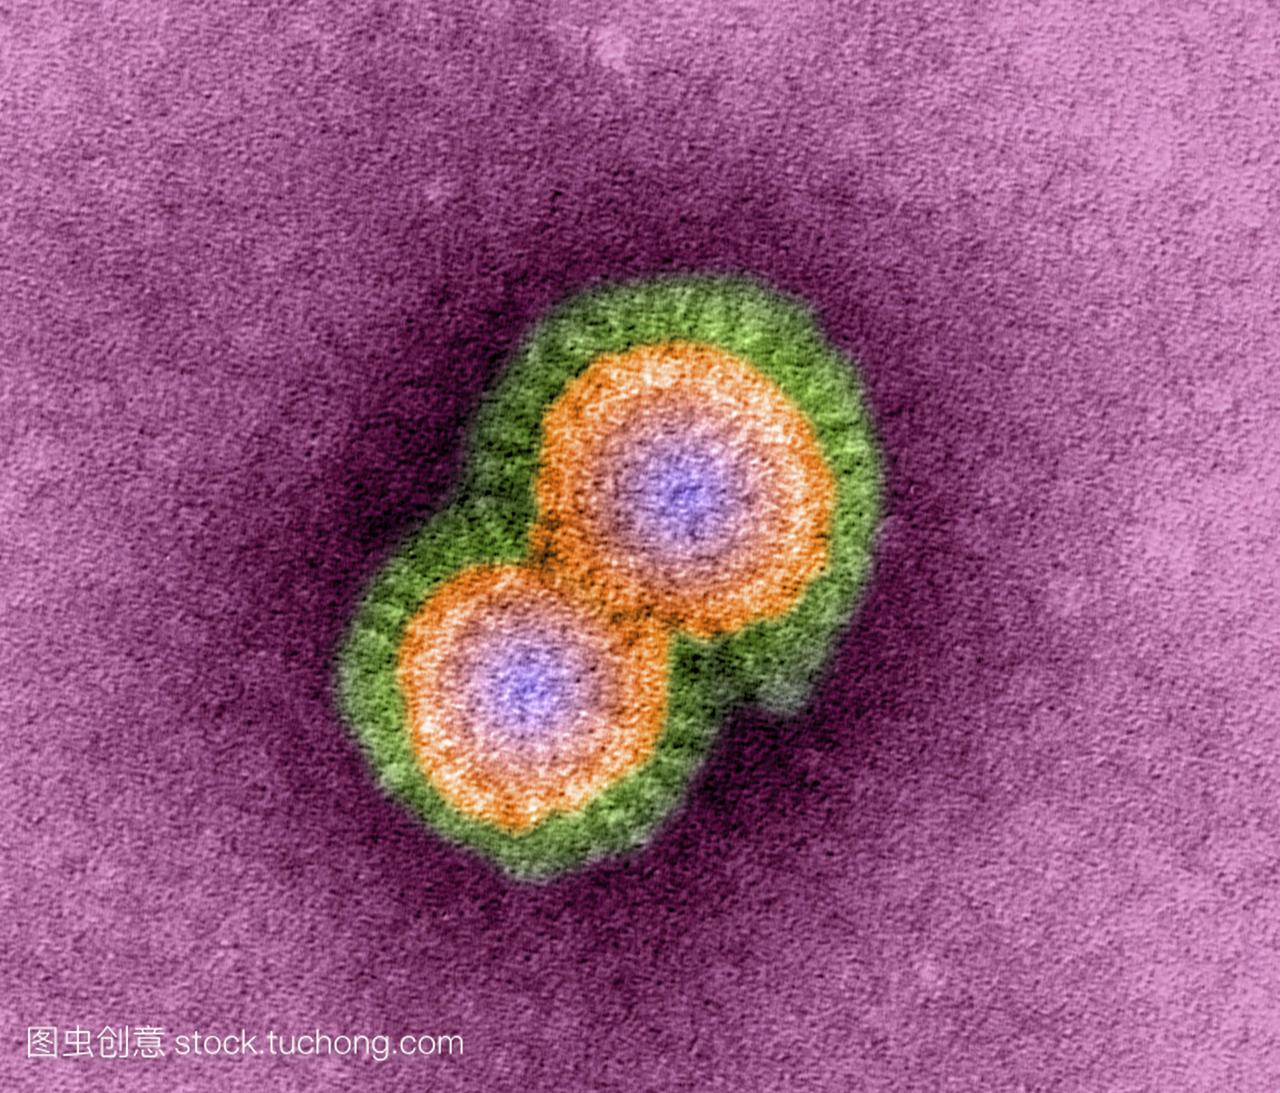 h5n1禽流感病毒粒子,彩色透射电子显微图tem。